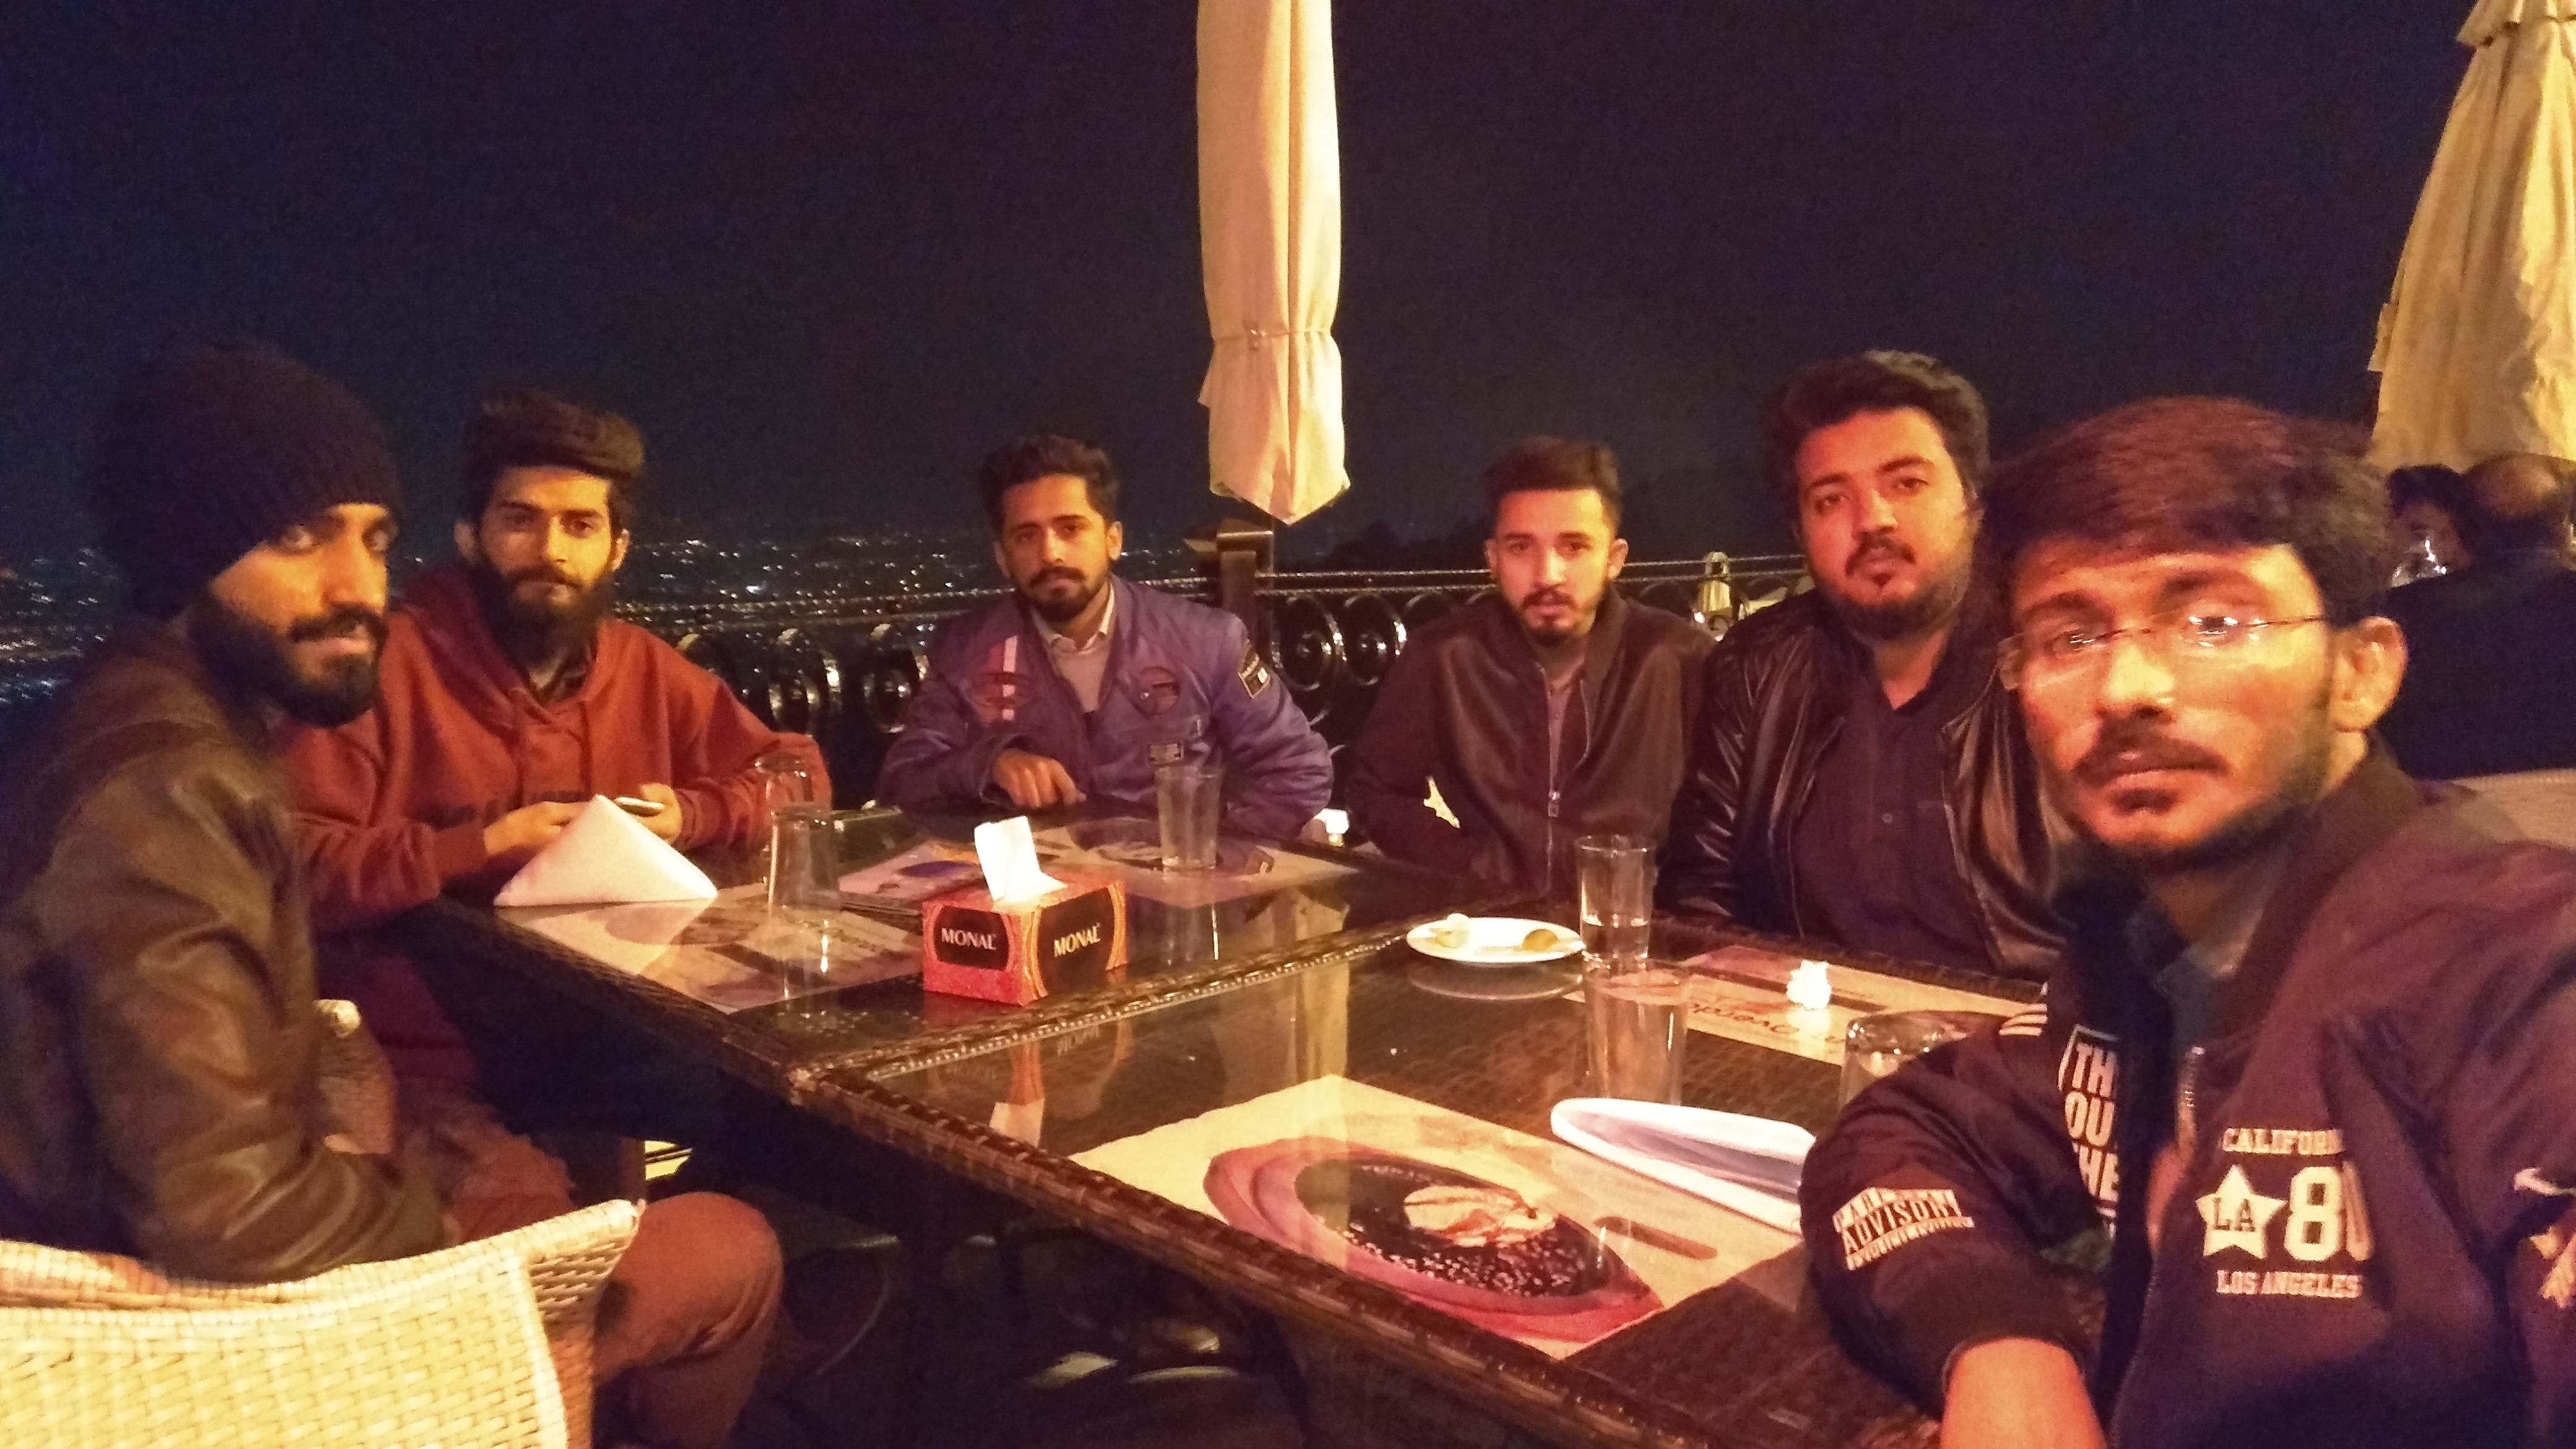 monal restaurant islamabad